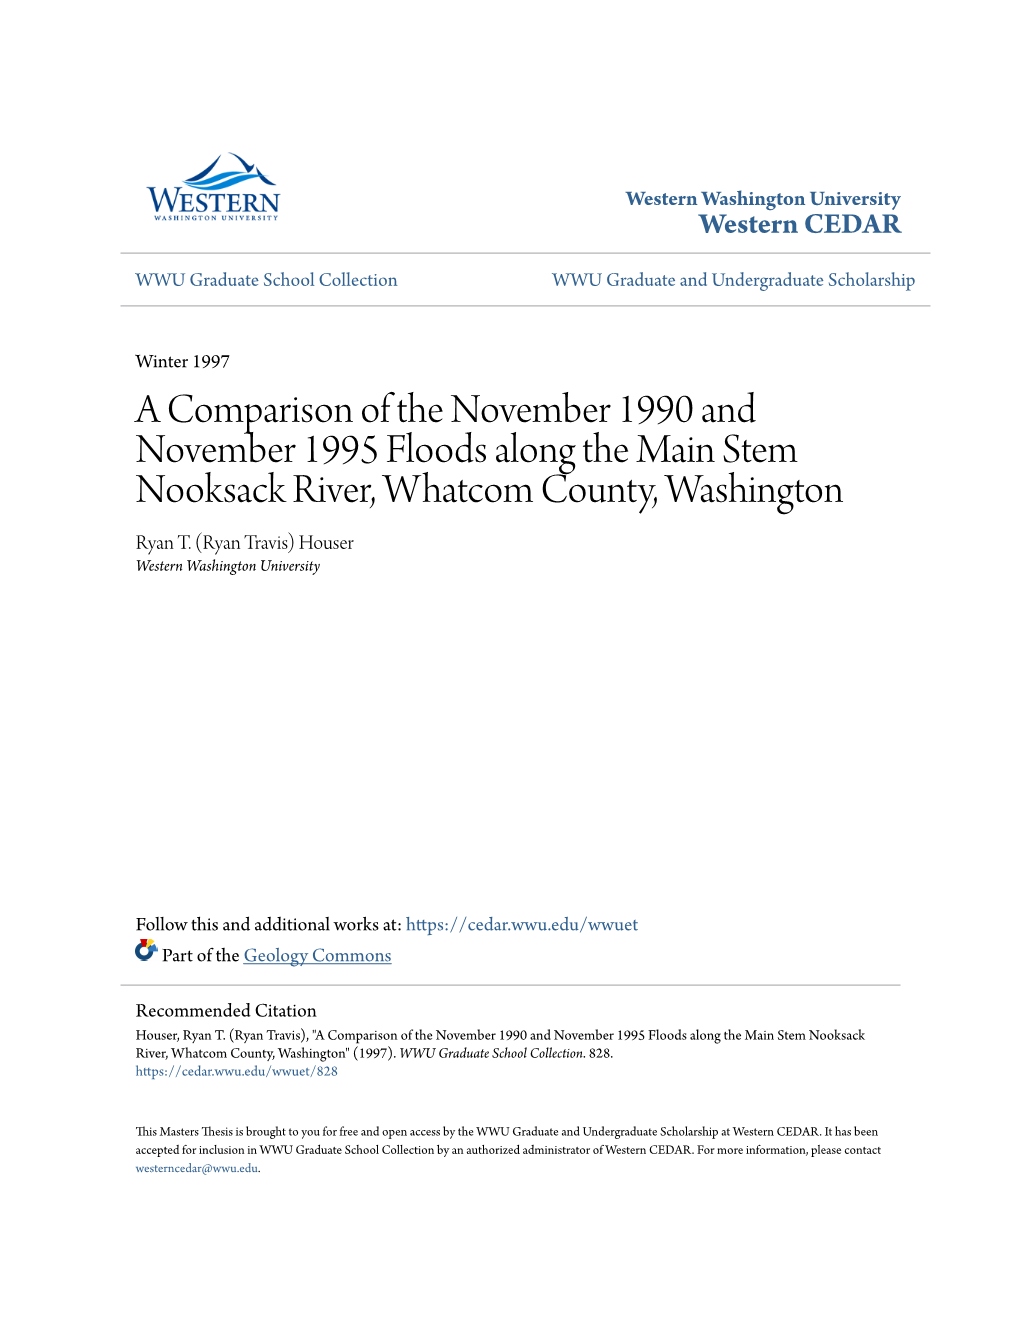 A Comparison of the November 1990 and November 1995 Floods Along the Main Stem Nooksack River, Whatcom County, Washington Ryan T